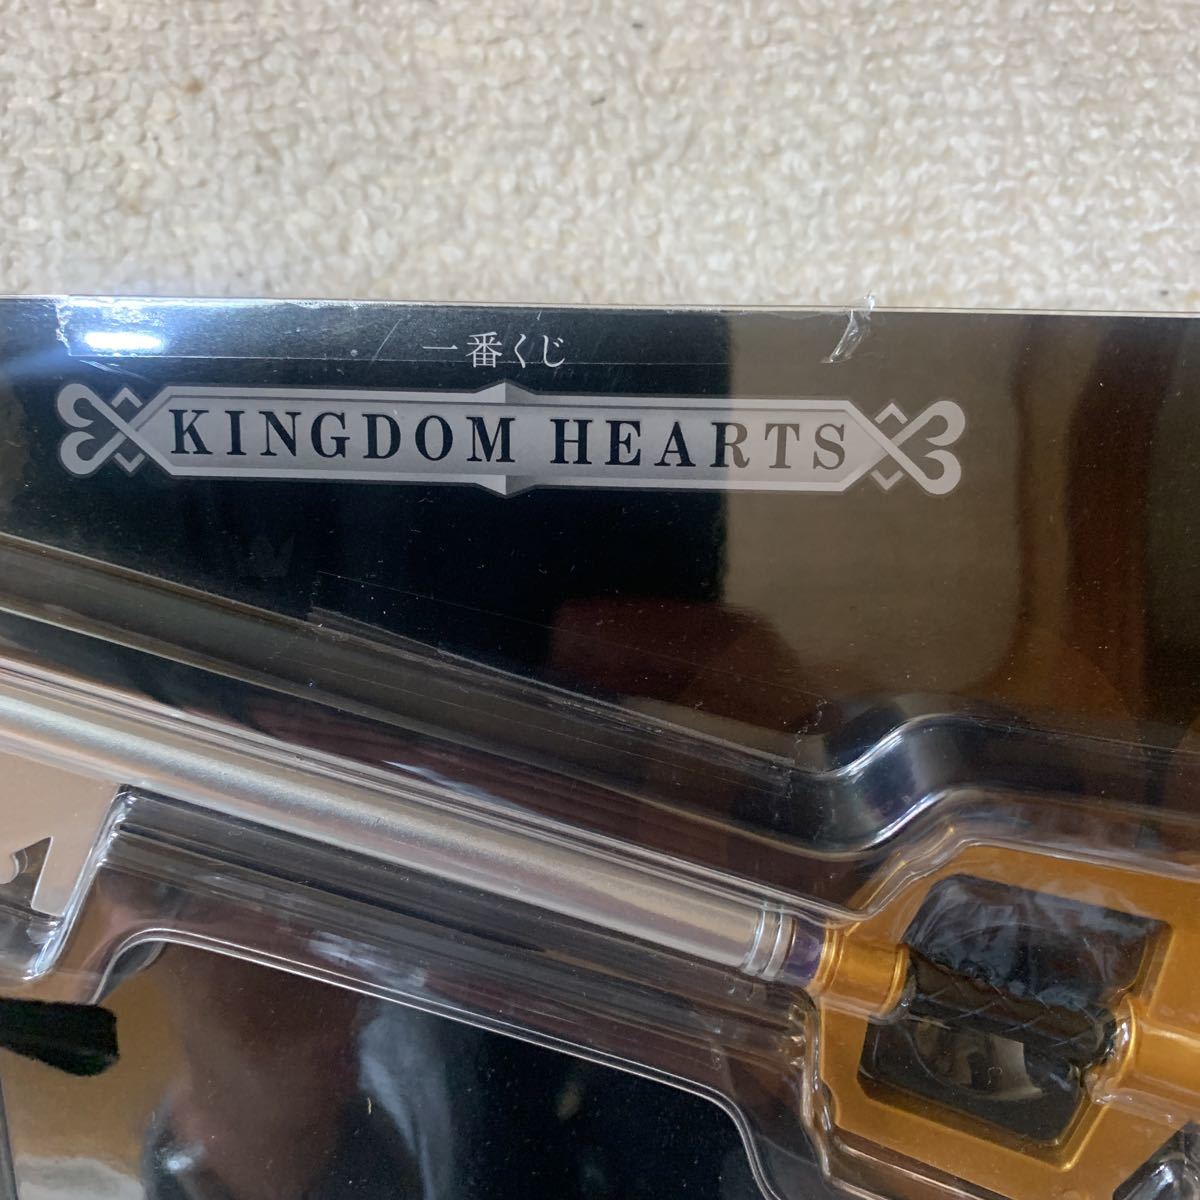  Kingdom Hearts ключ лезвие авторучка 